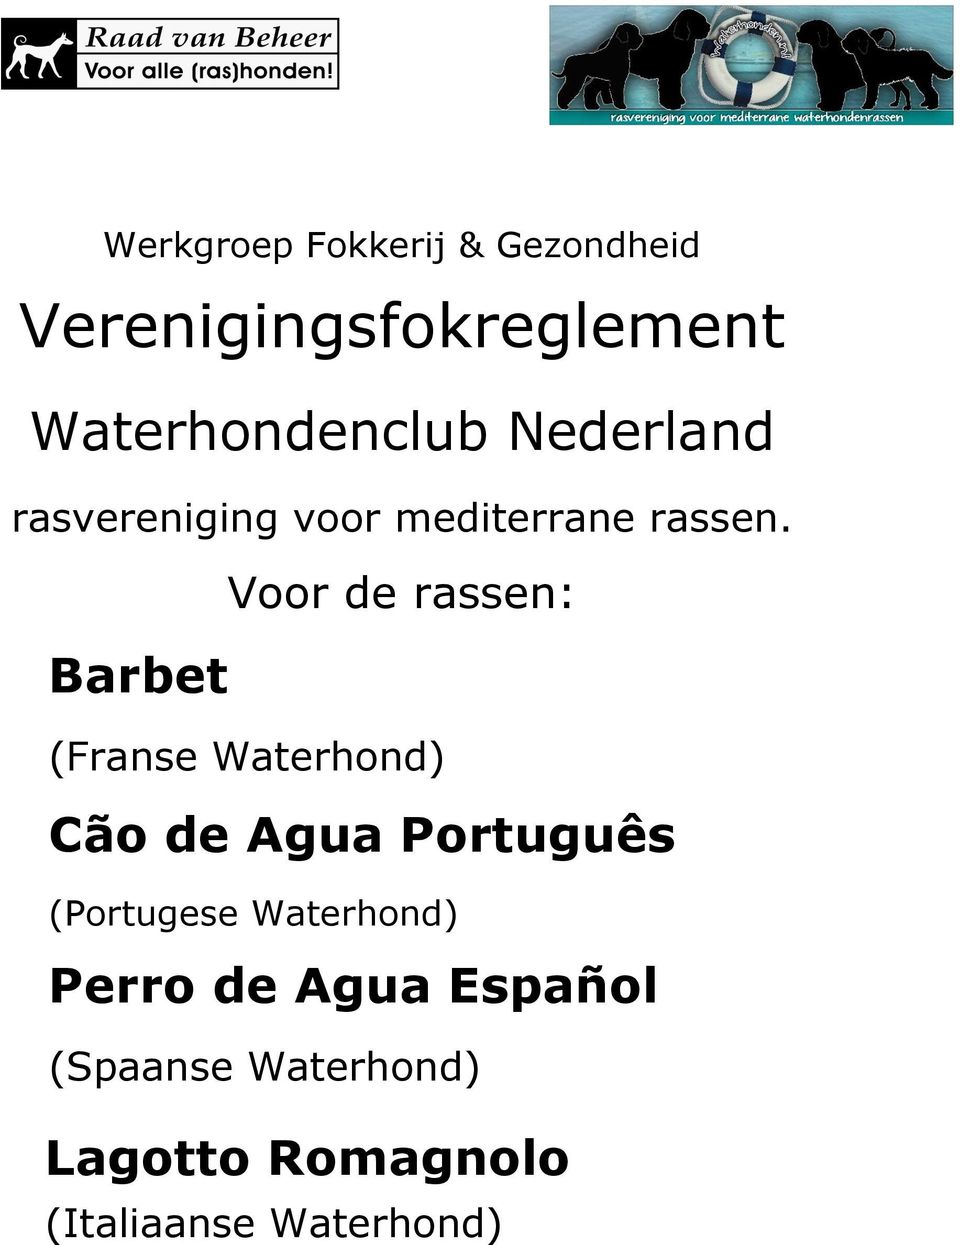 Voor de rassen: Barbet (Franse Waterhond) Cão de Agua Português